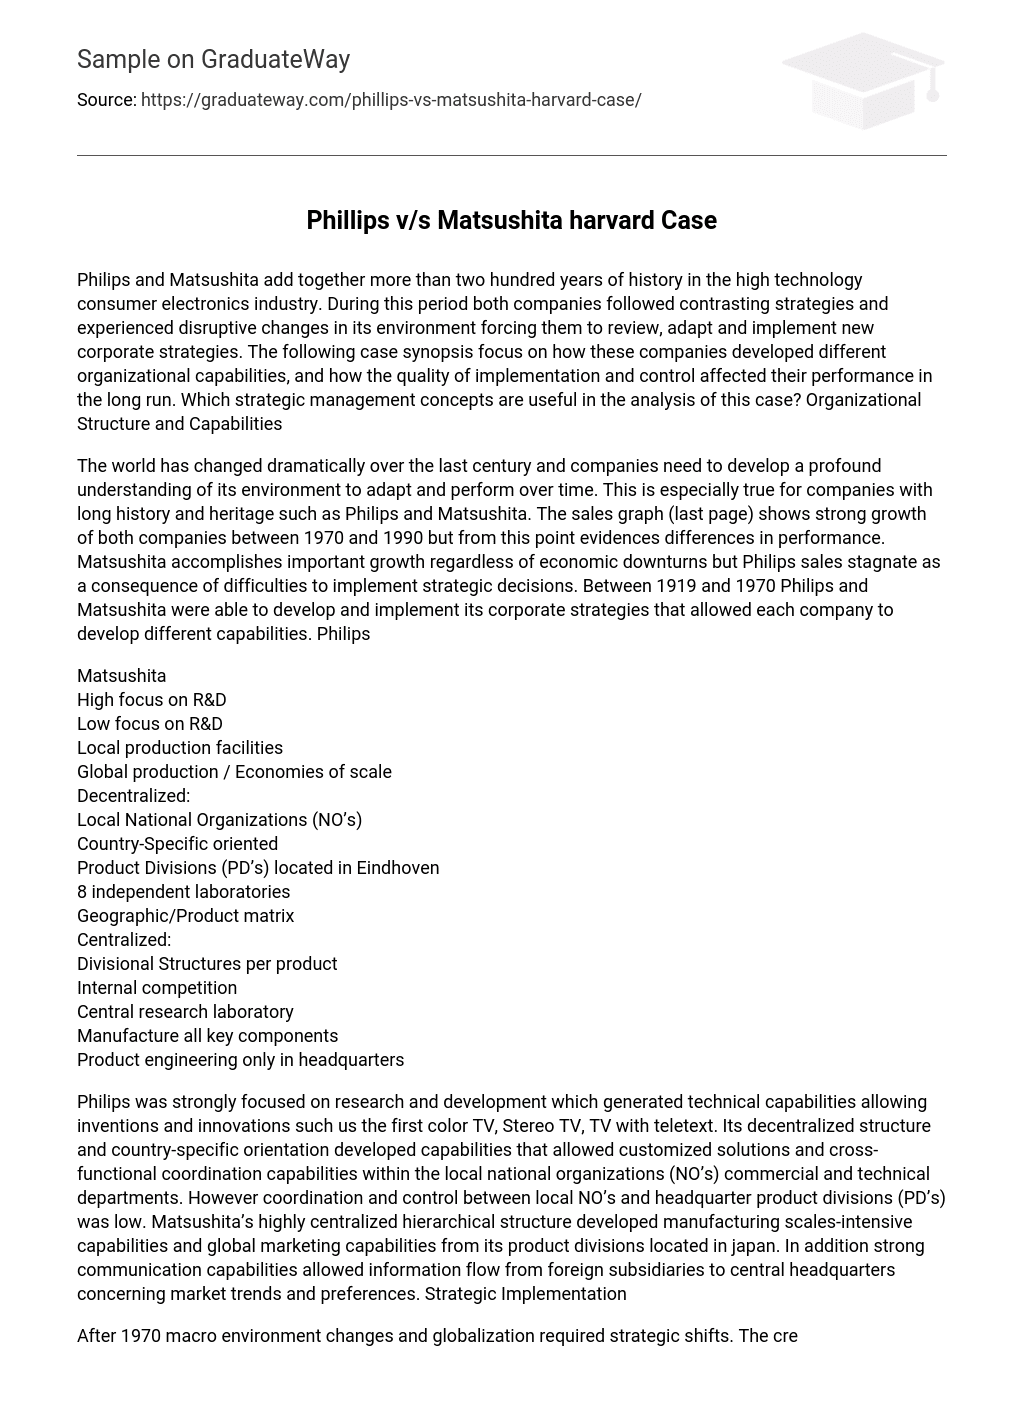 Phillips v/s Matsushita harvard Case Analysis